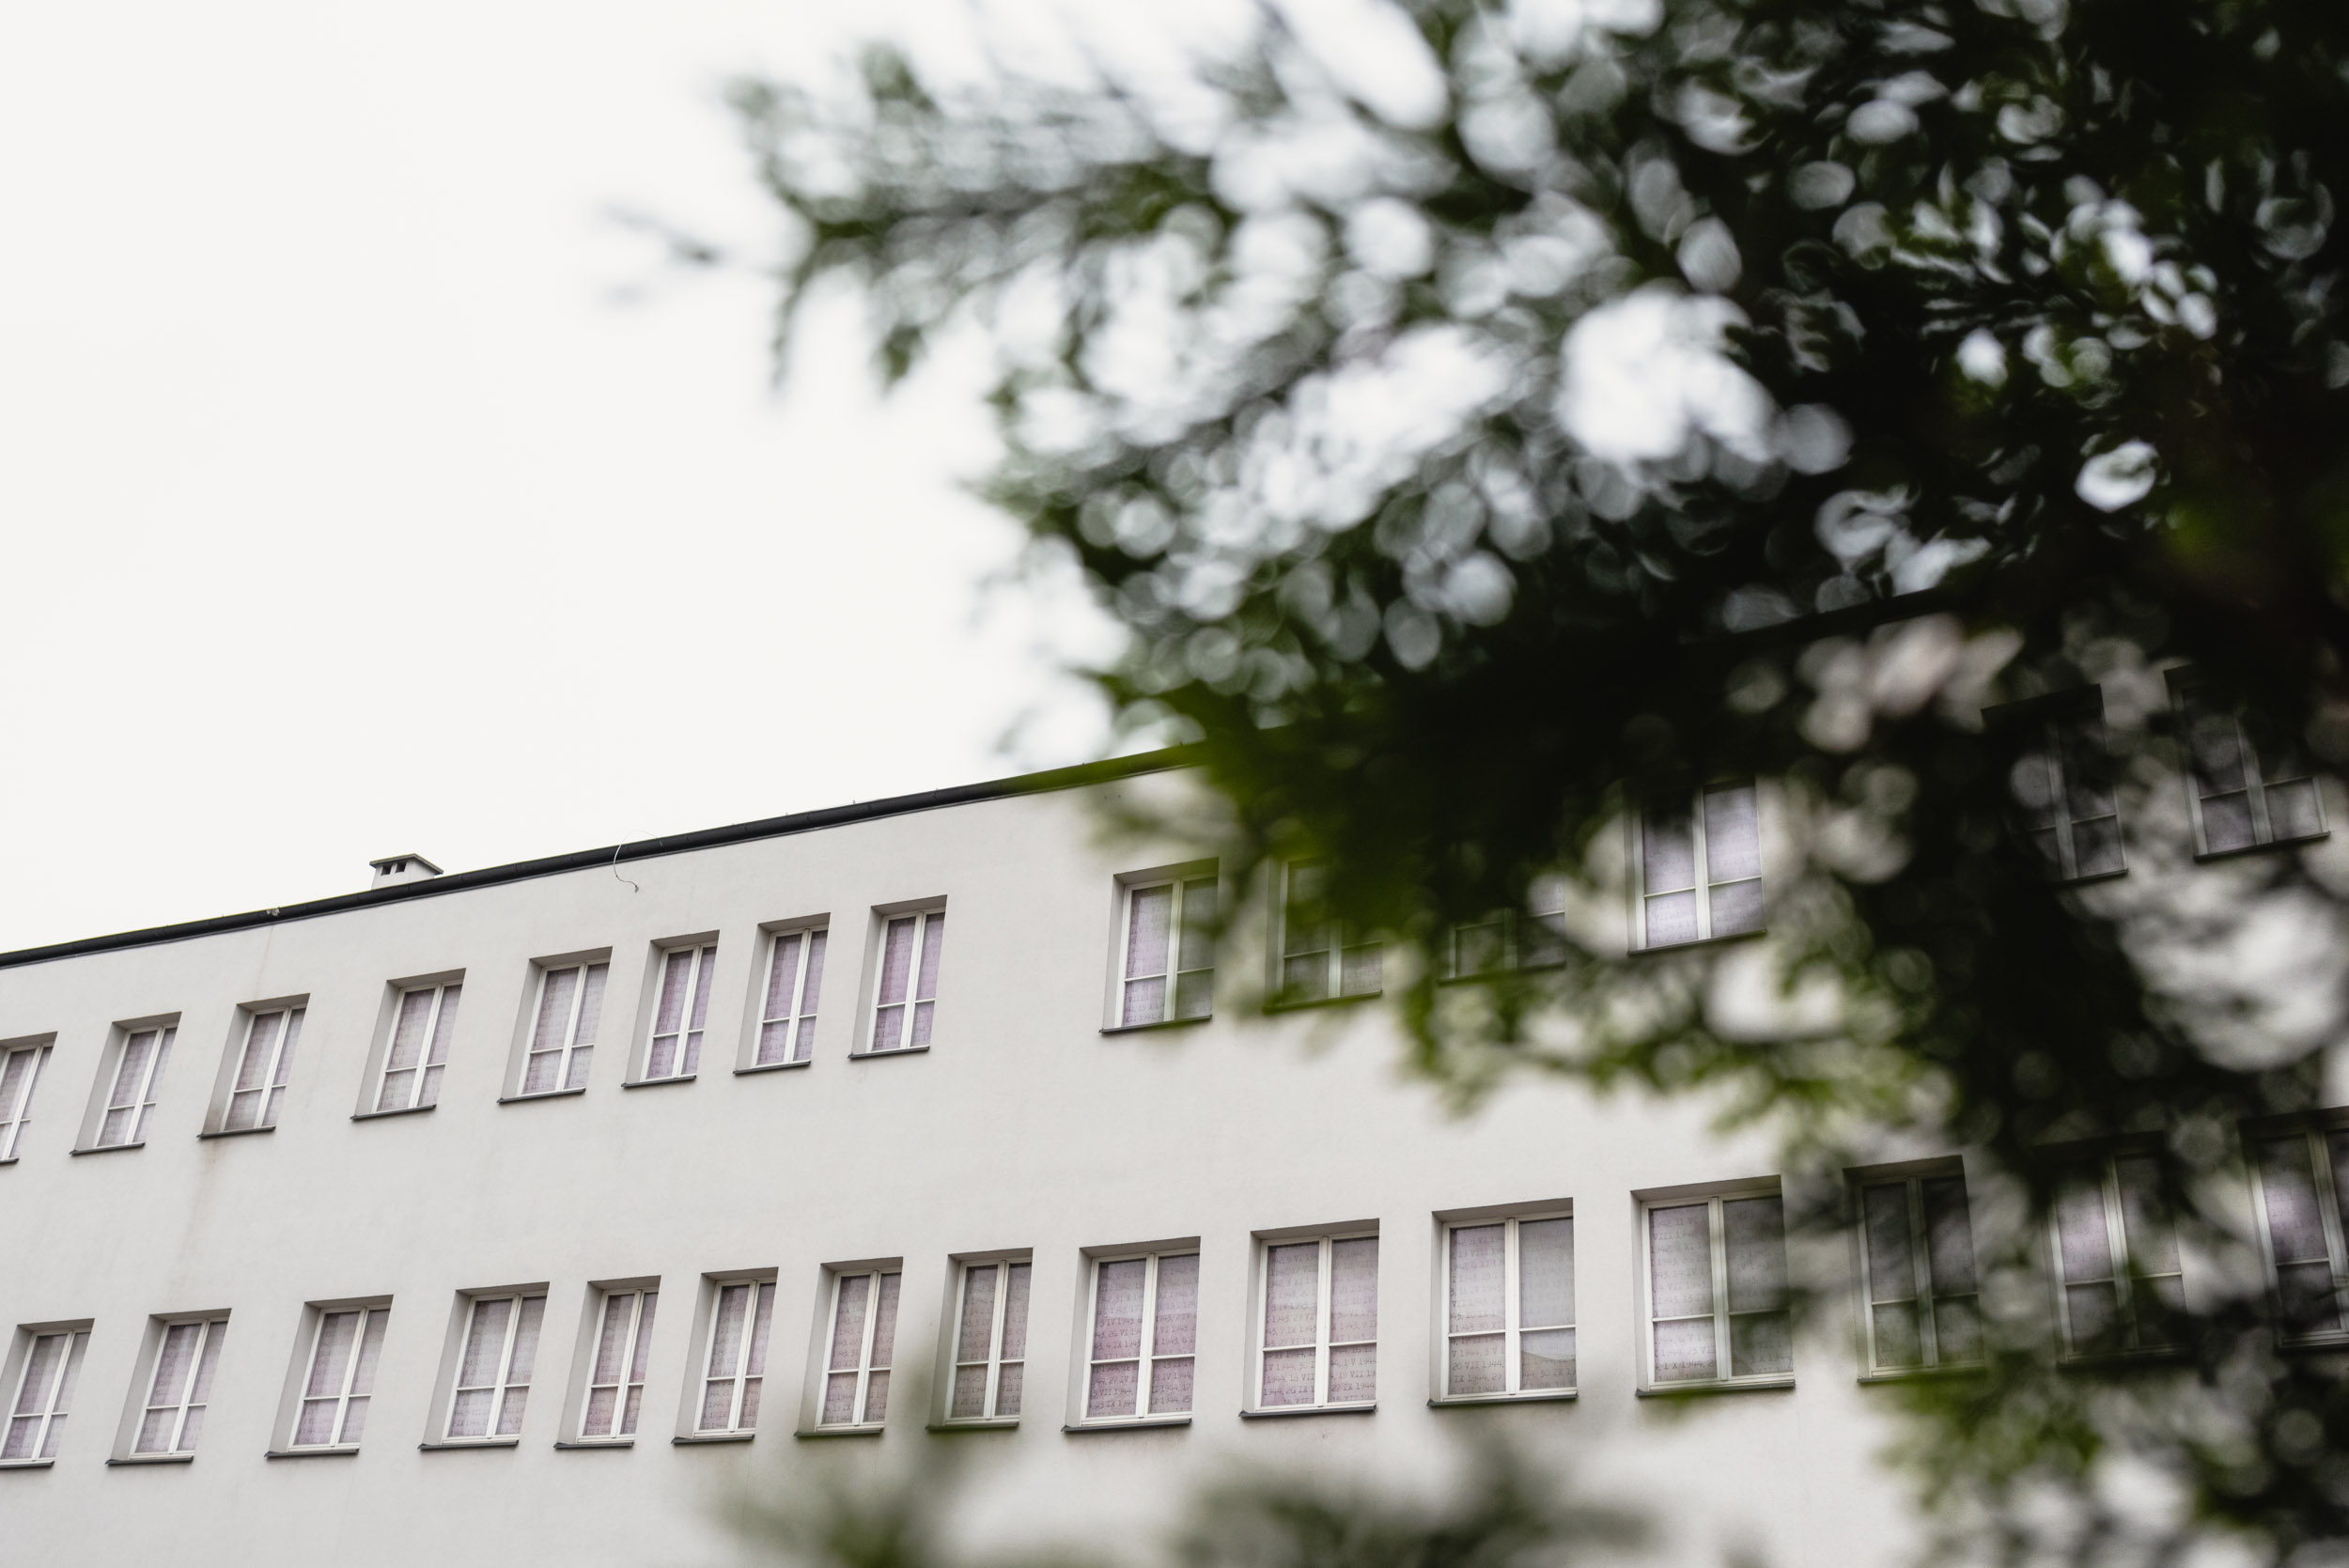 Oskar Schindler's Enamel Factory windows